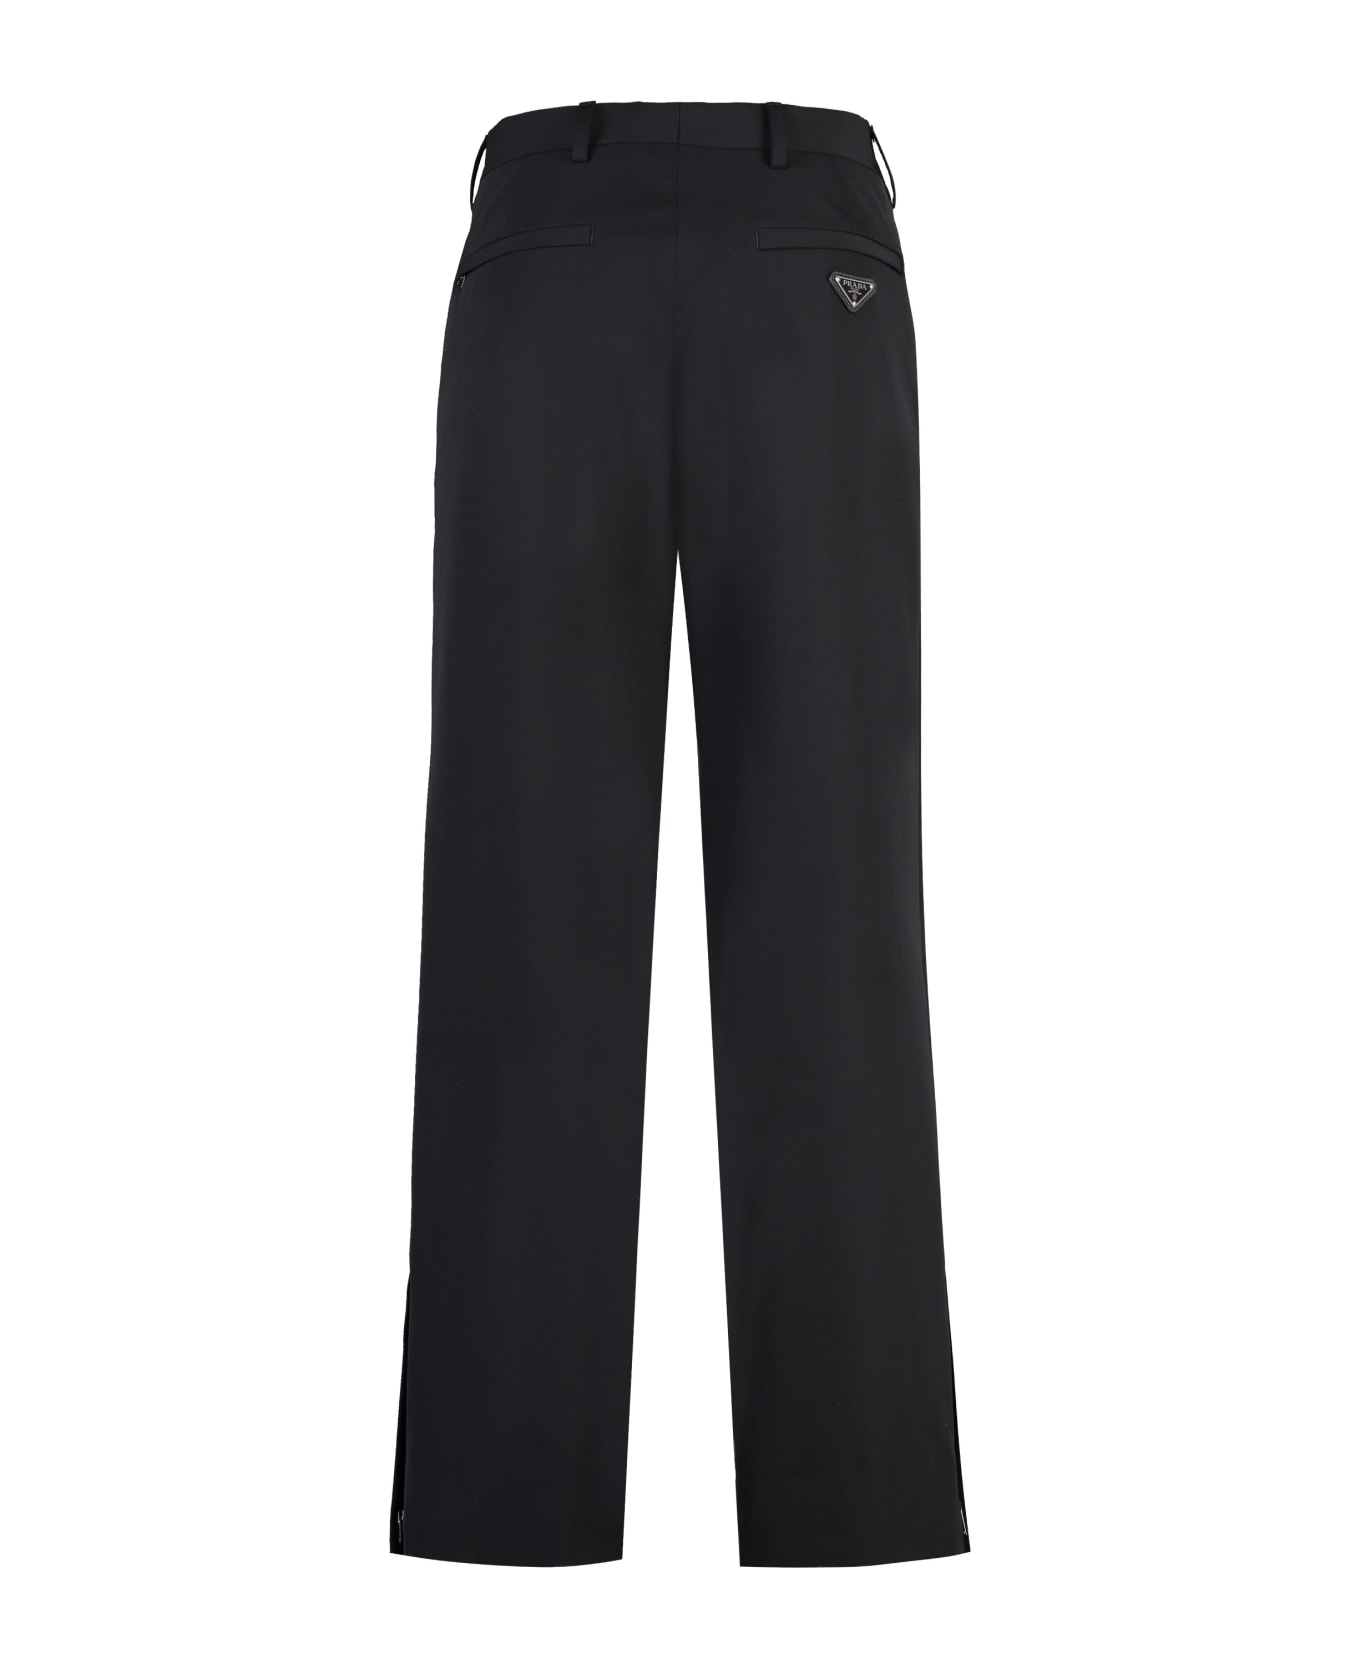 Prada Technical Fabric Pants - black ボトムス